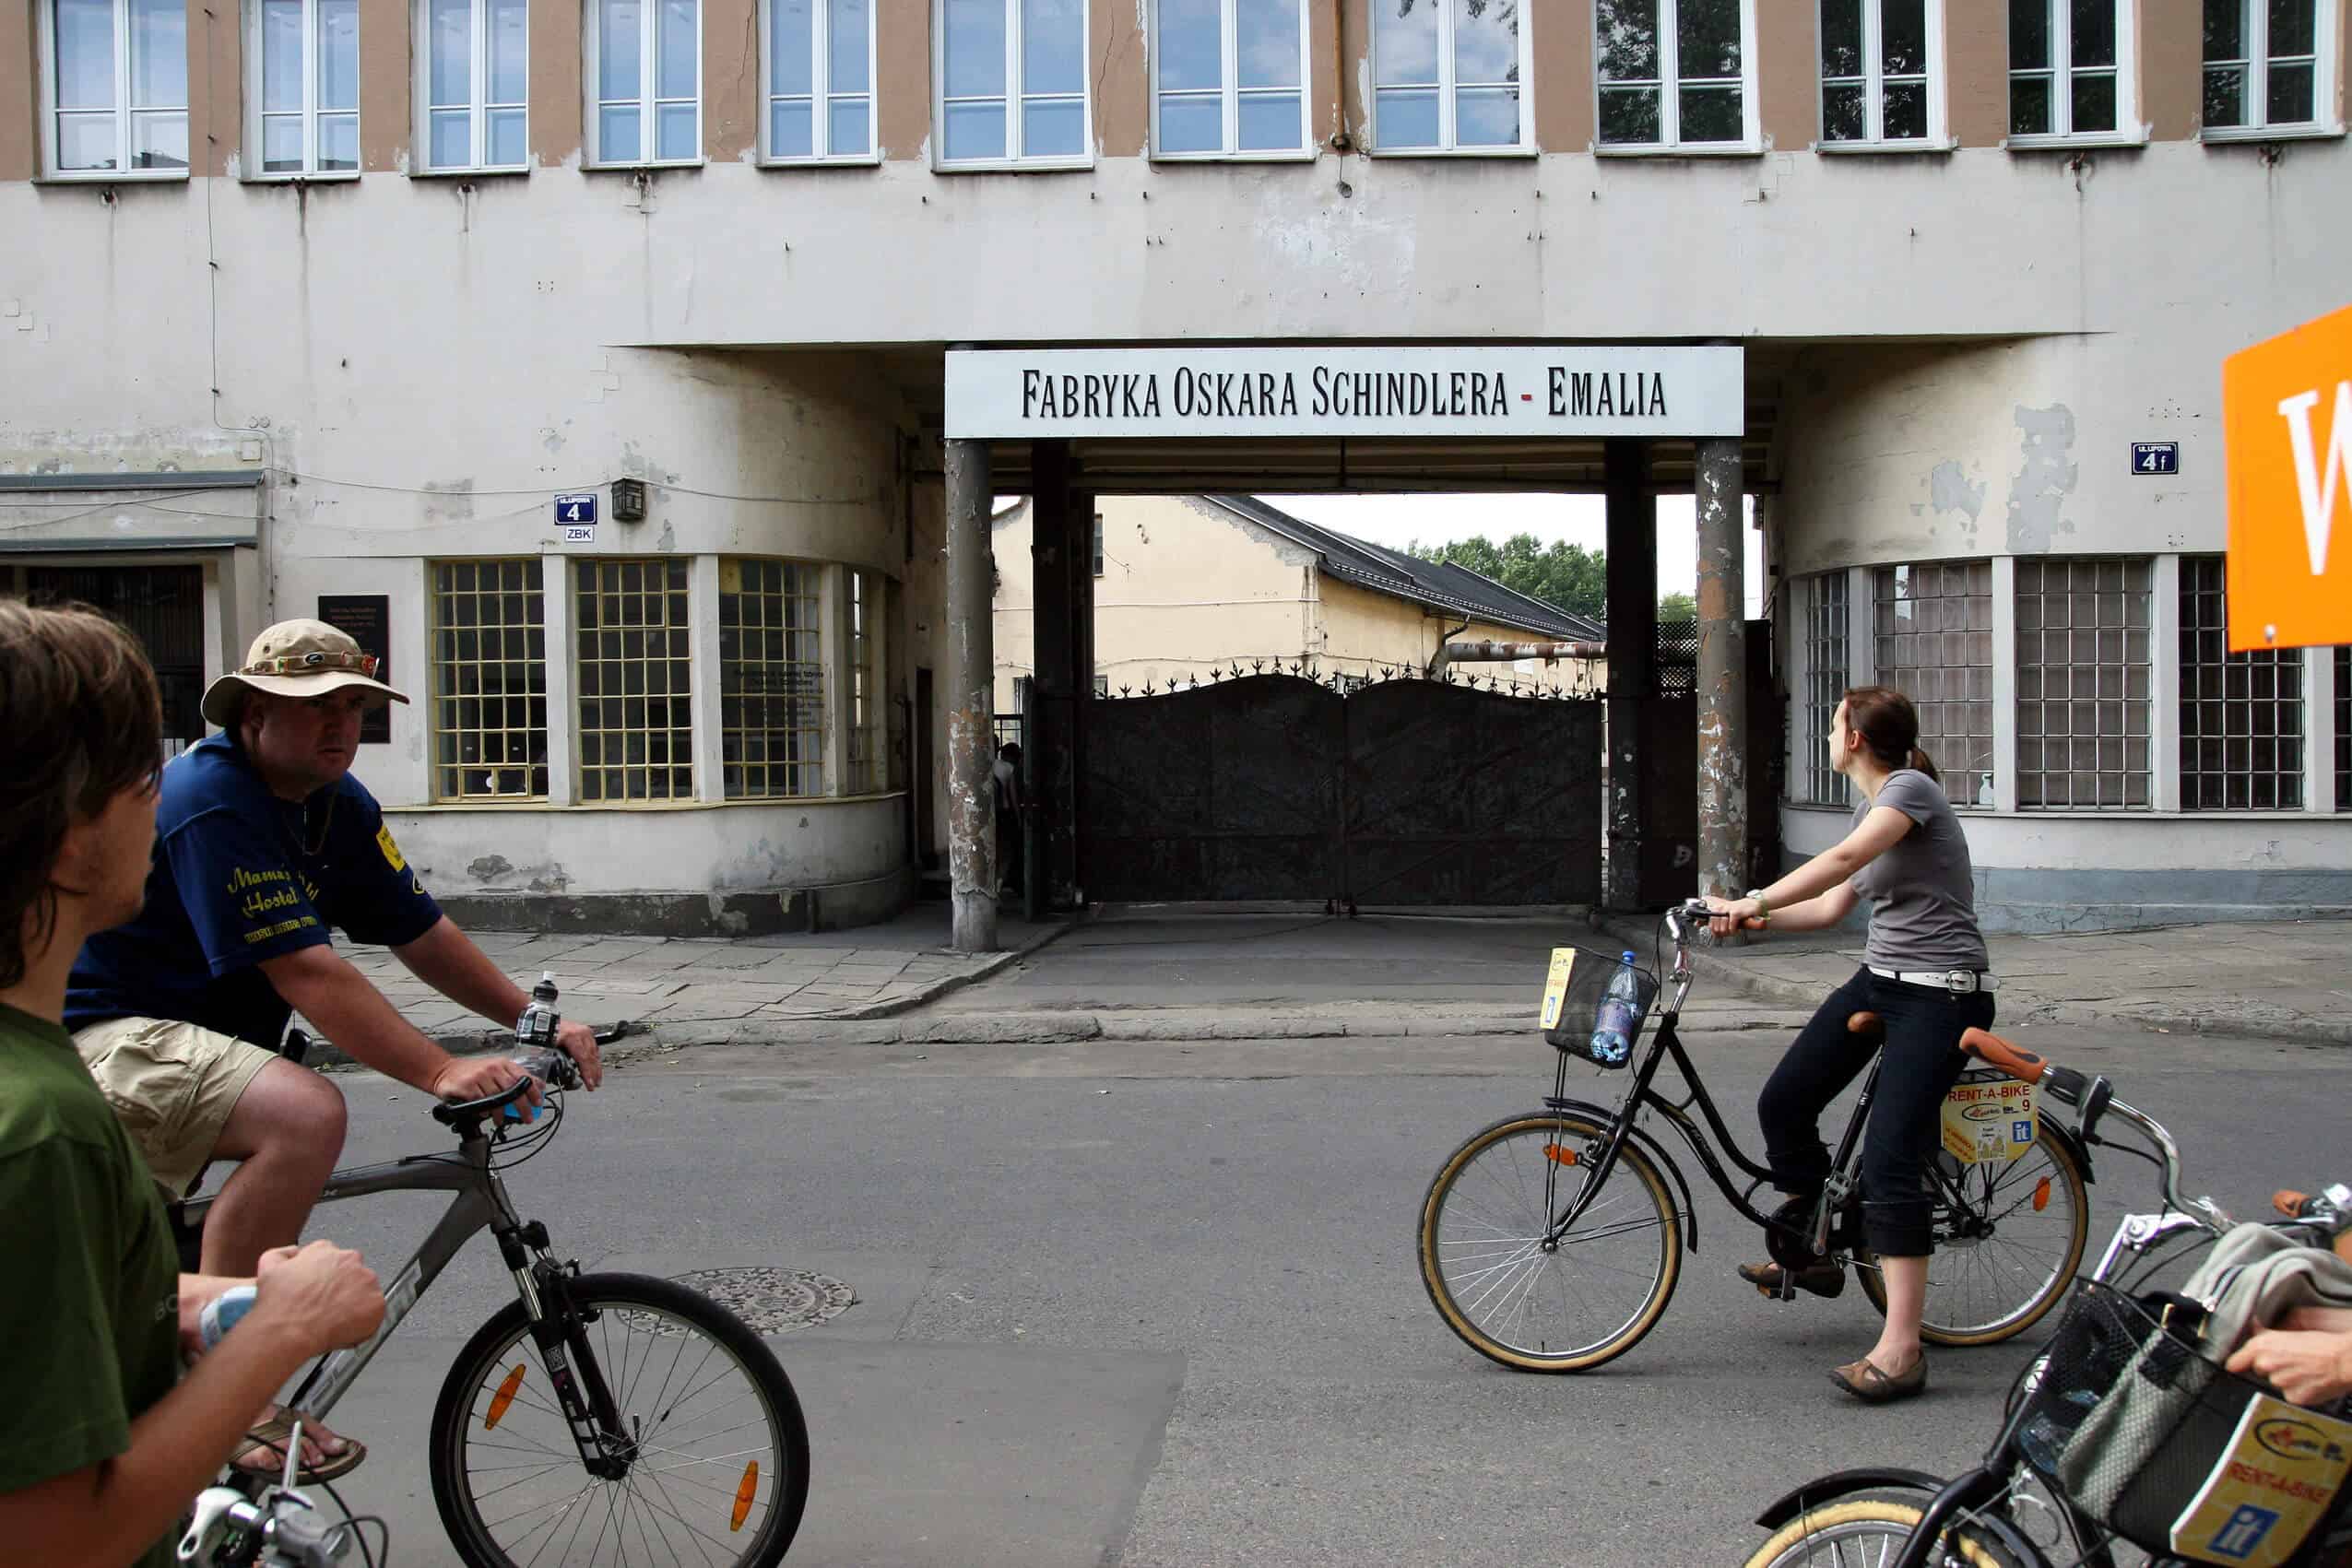 Main building entrance to Oscar Schindlers factory in Krakow, Poland / Photo: Shutterstock - Gurer Sumer